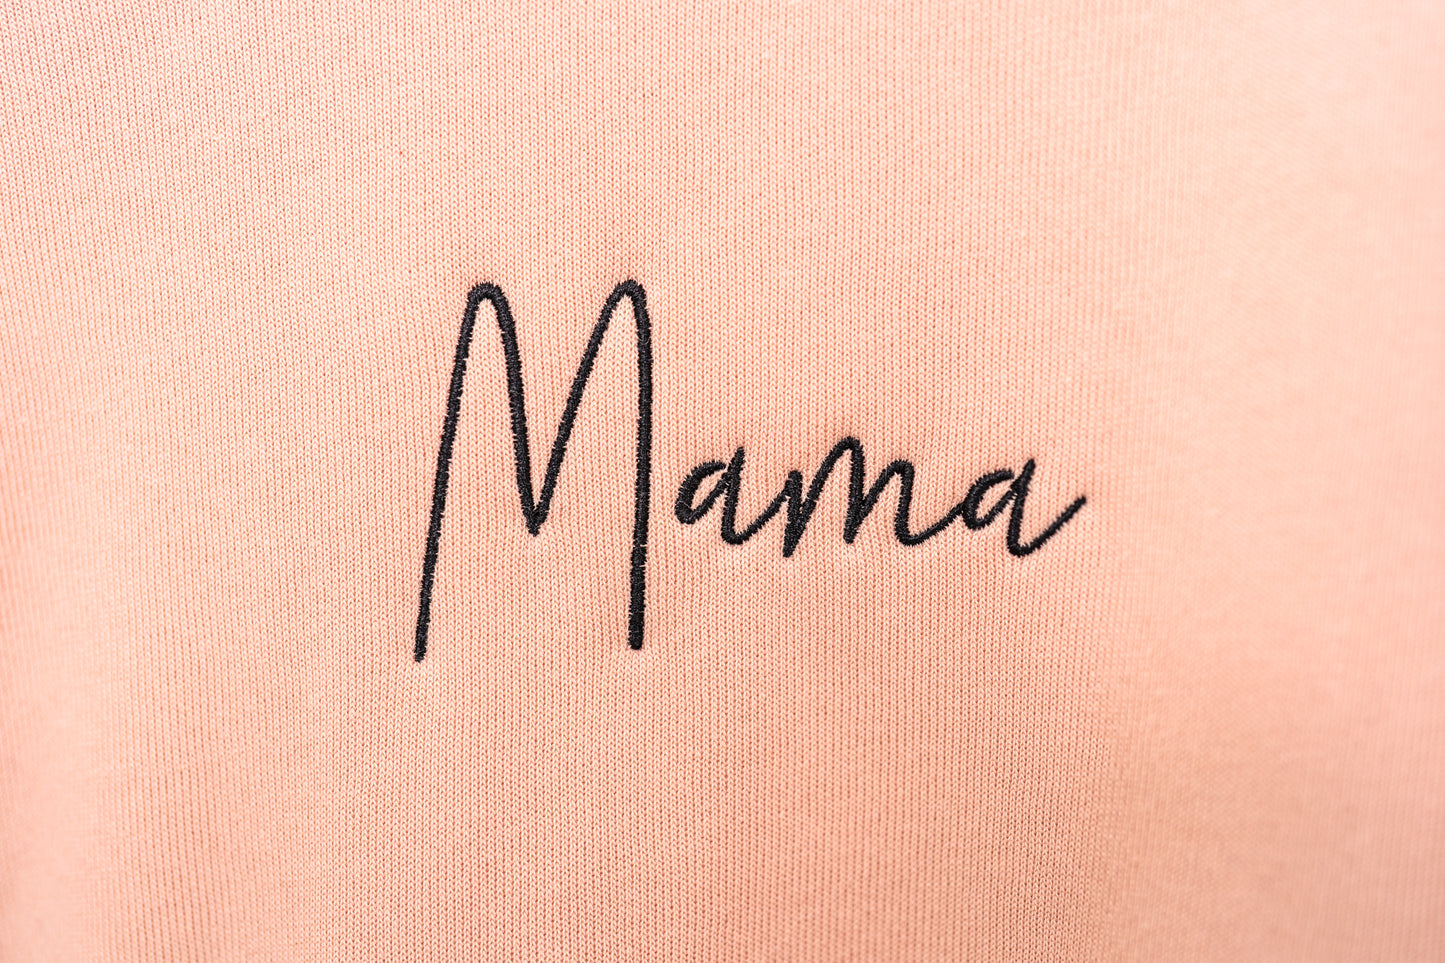 Mama (Brook Script, Black) - Embroidered Sweatshirt (Peach)